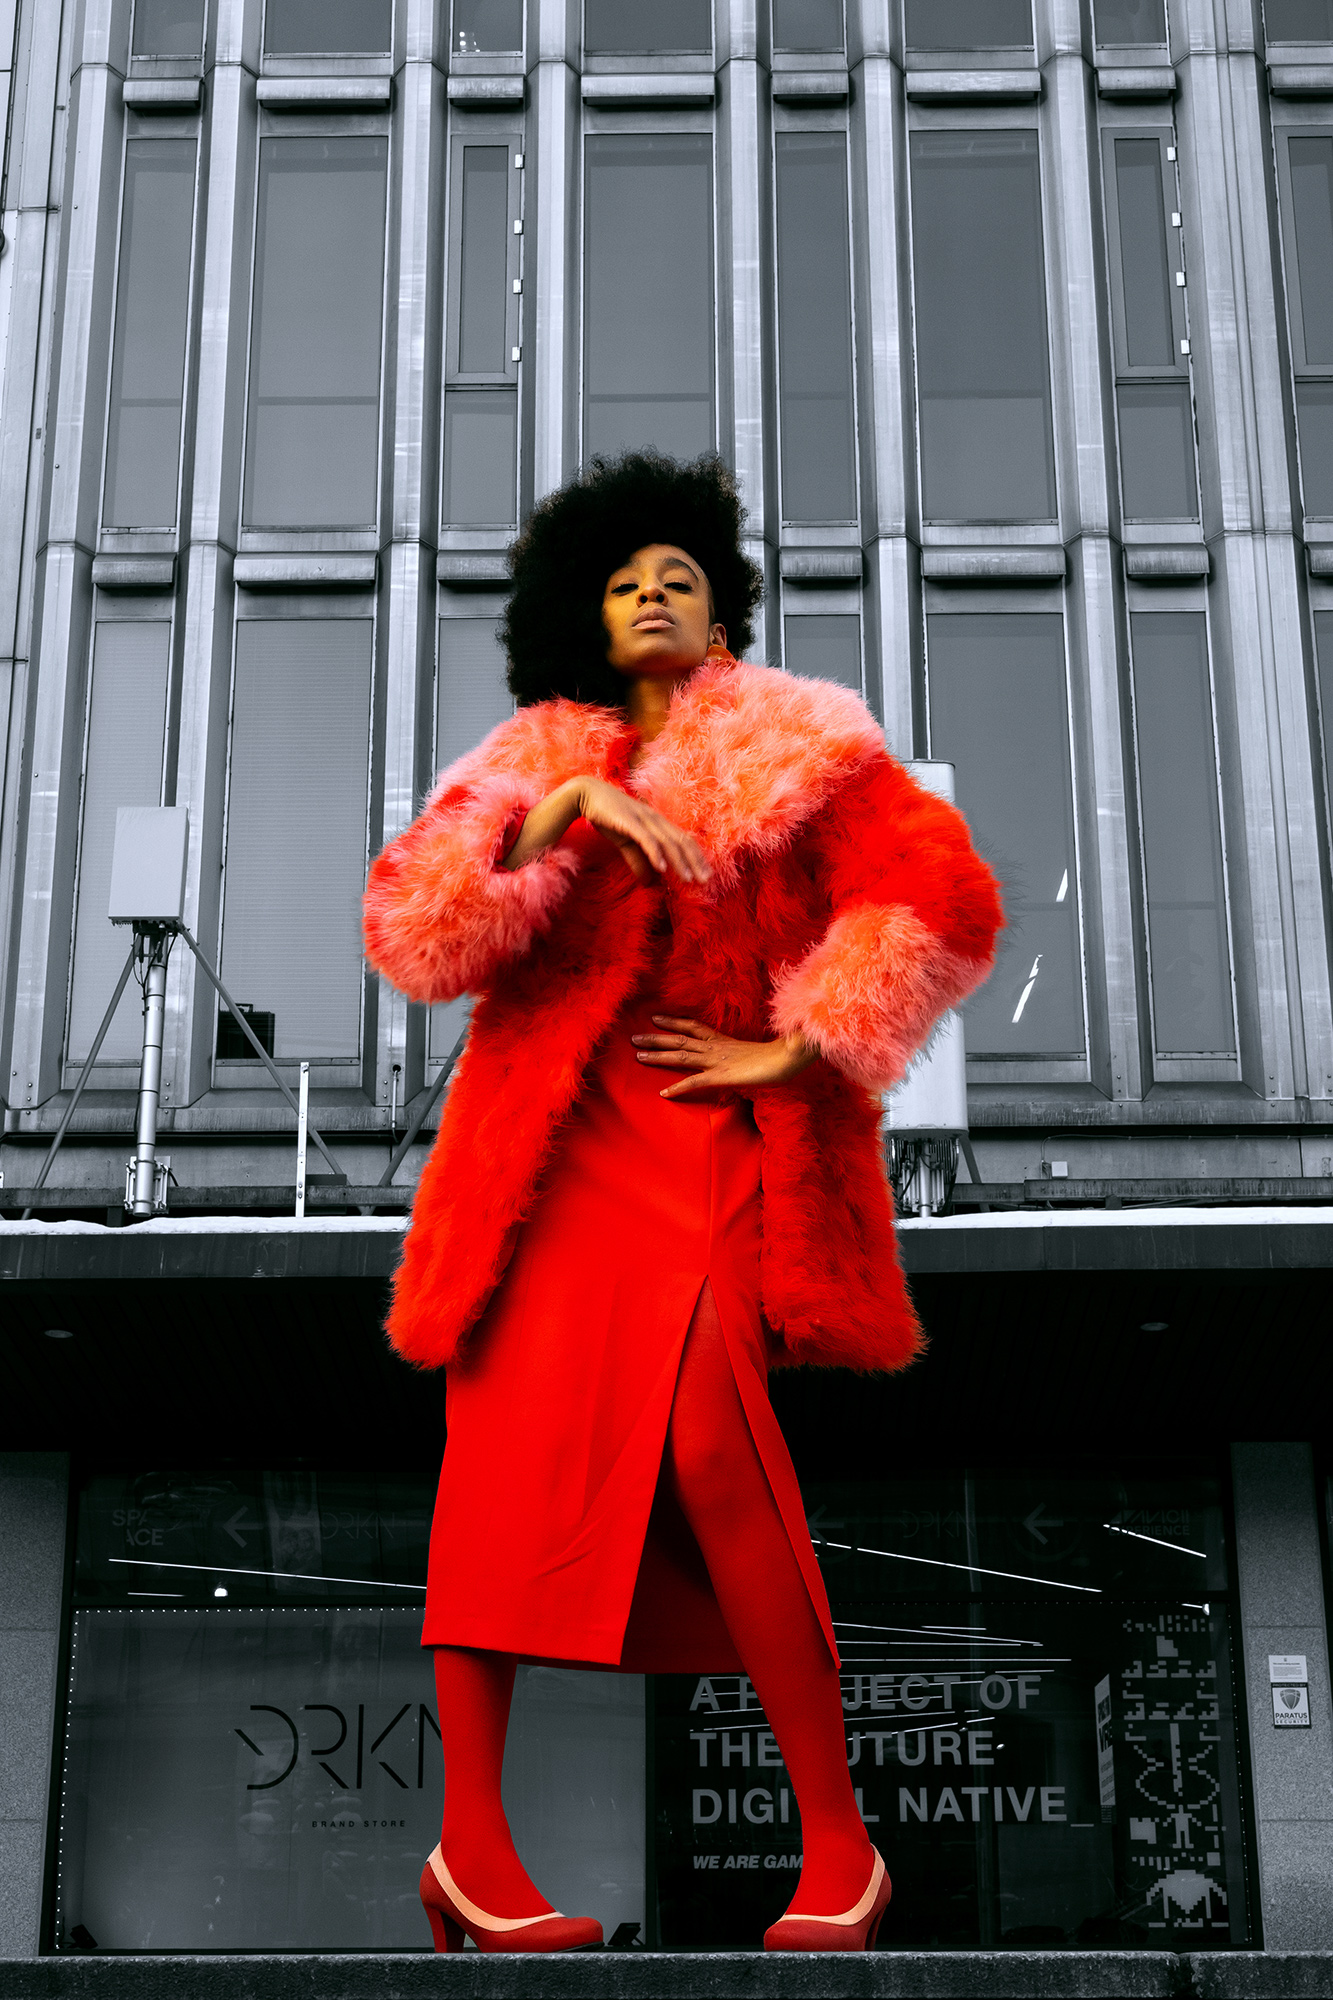 krullmag, shocking red fur coat against gray cityscape